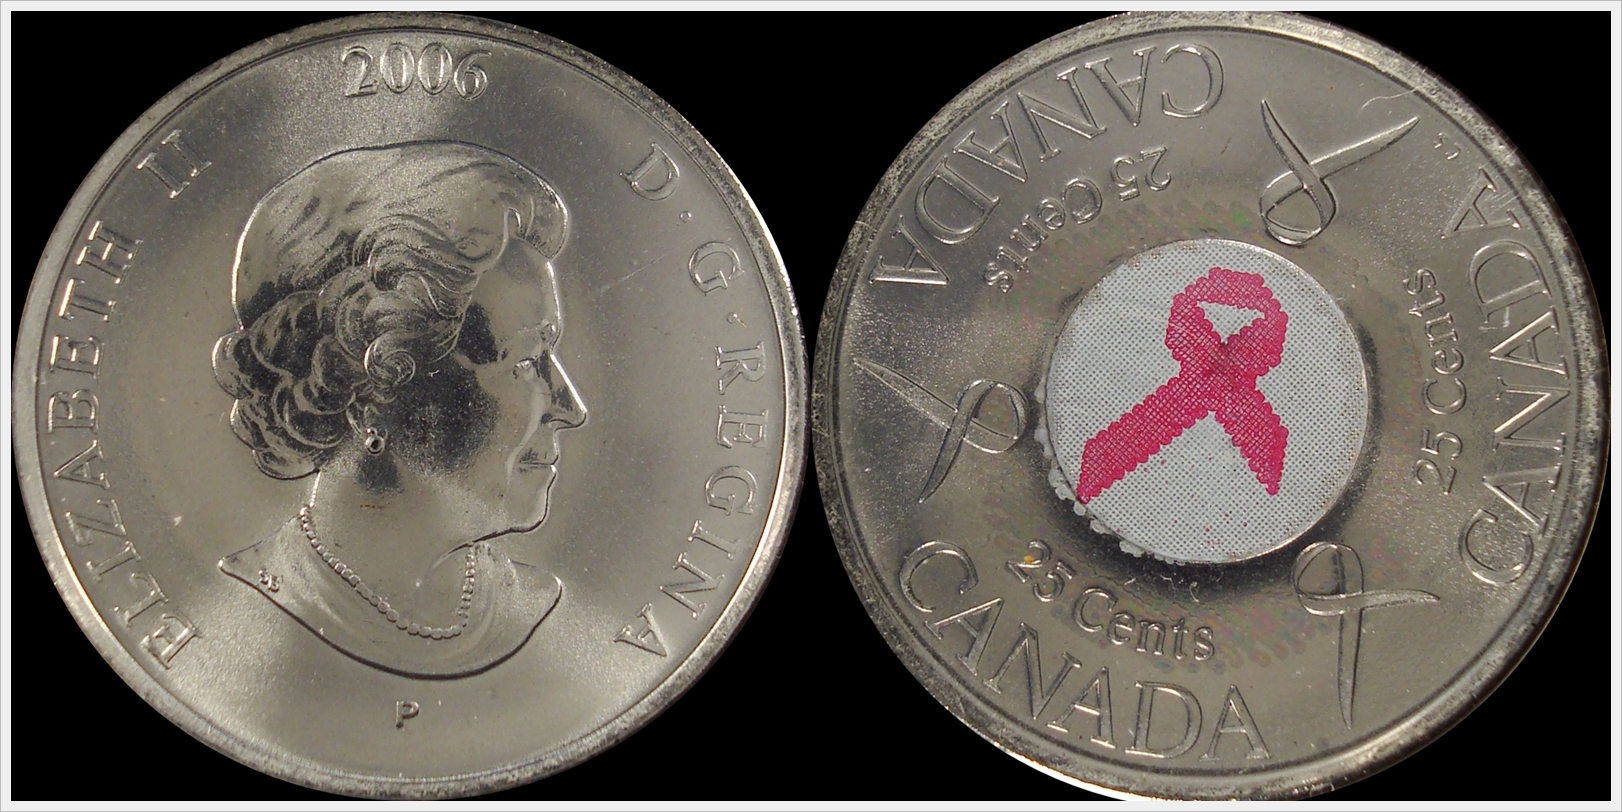 Canada 2006 pink ribbon.jpg